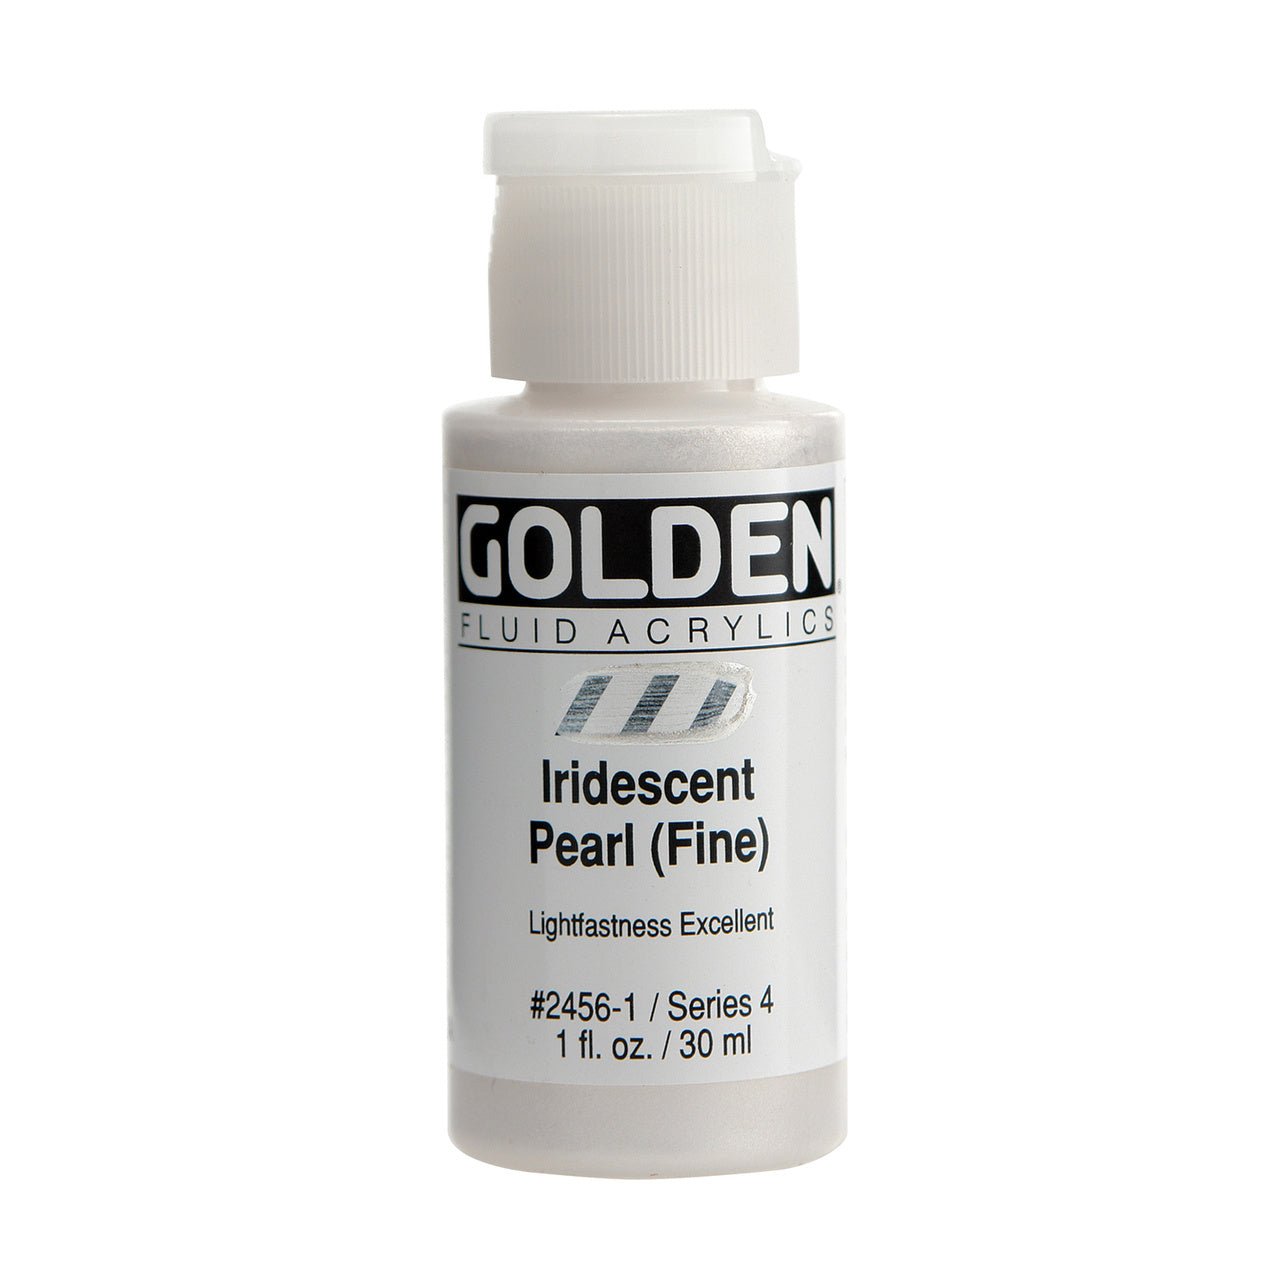 Golden Fluid Acrylic Iridescent Pearl (fine) 1 oz - merriartist.com